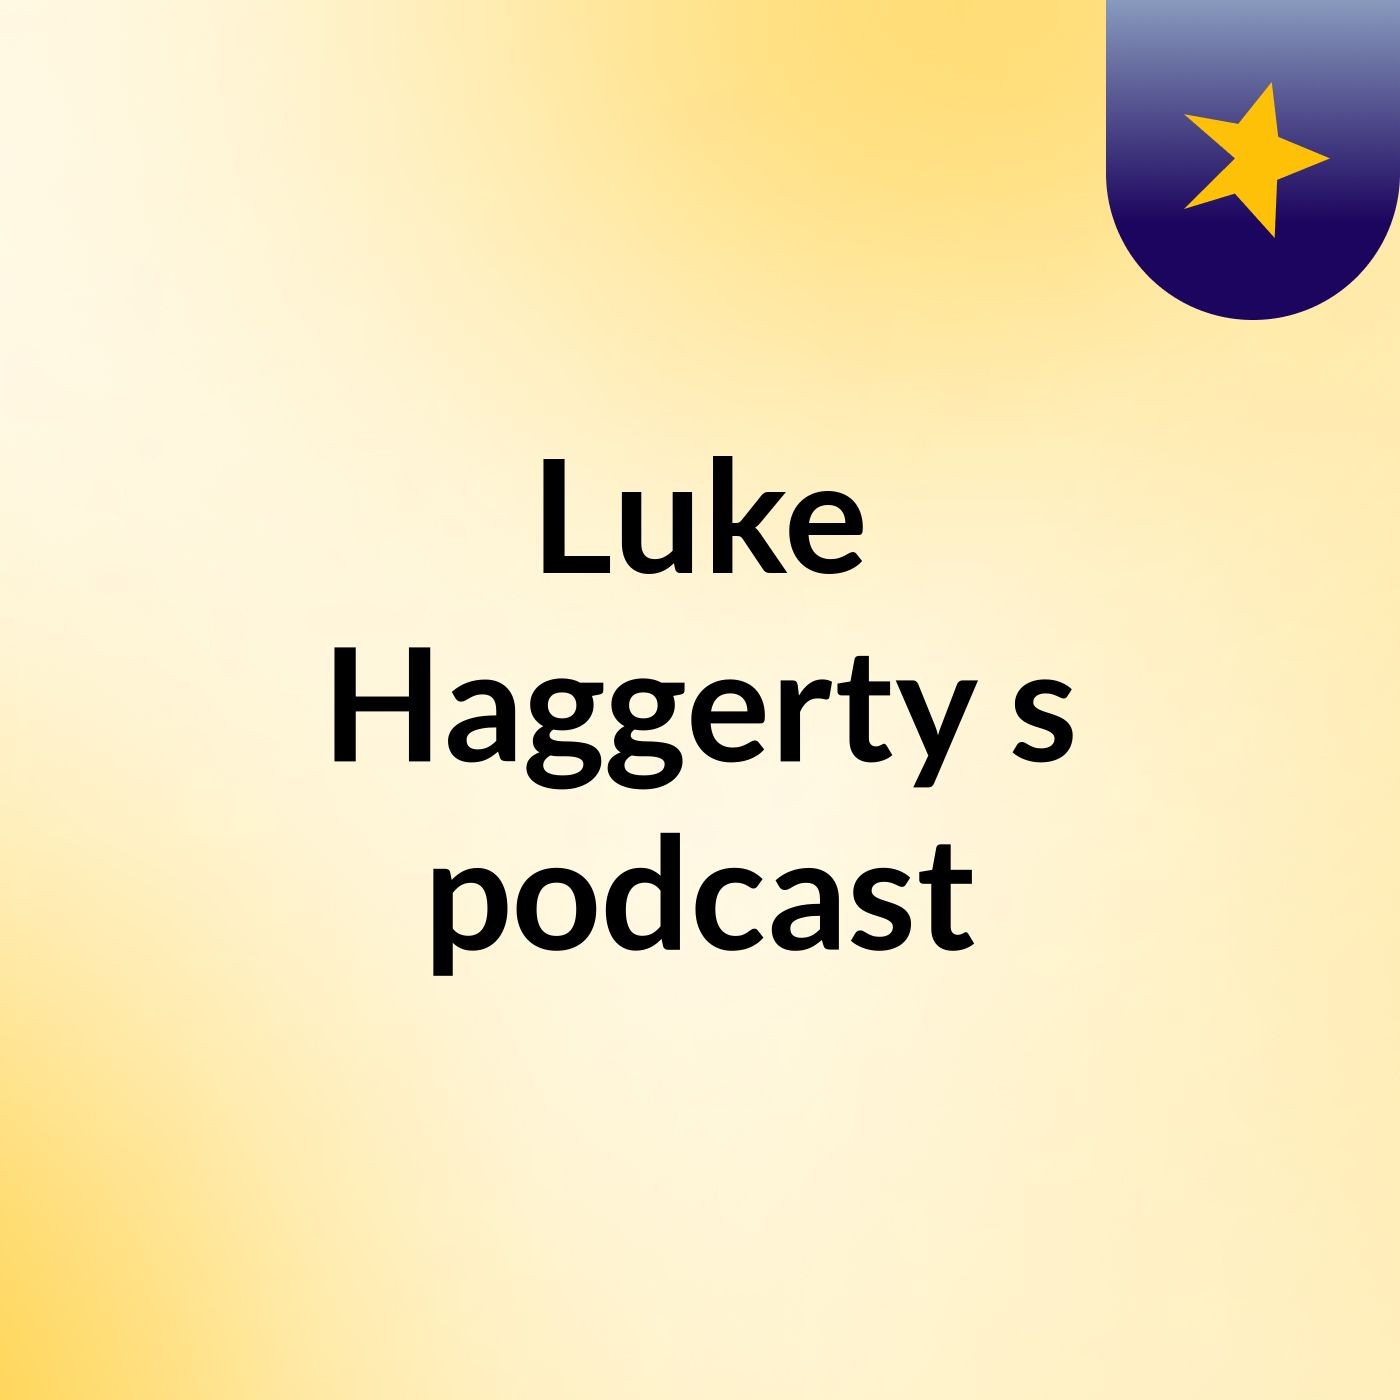 Episode 2 - Luke Haggerty's podcast